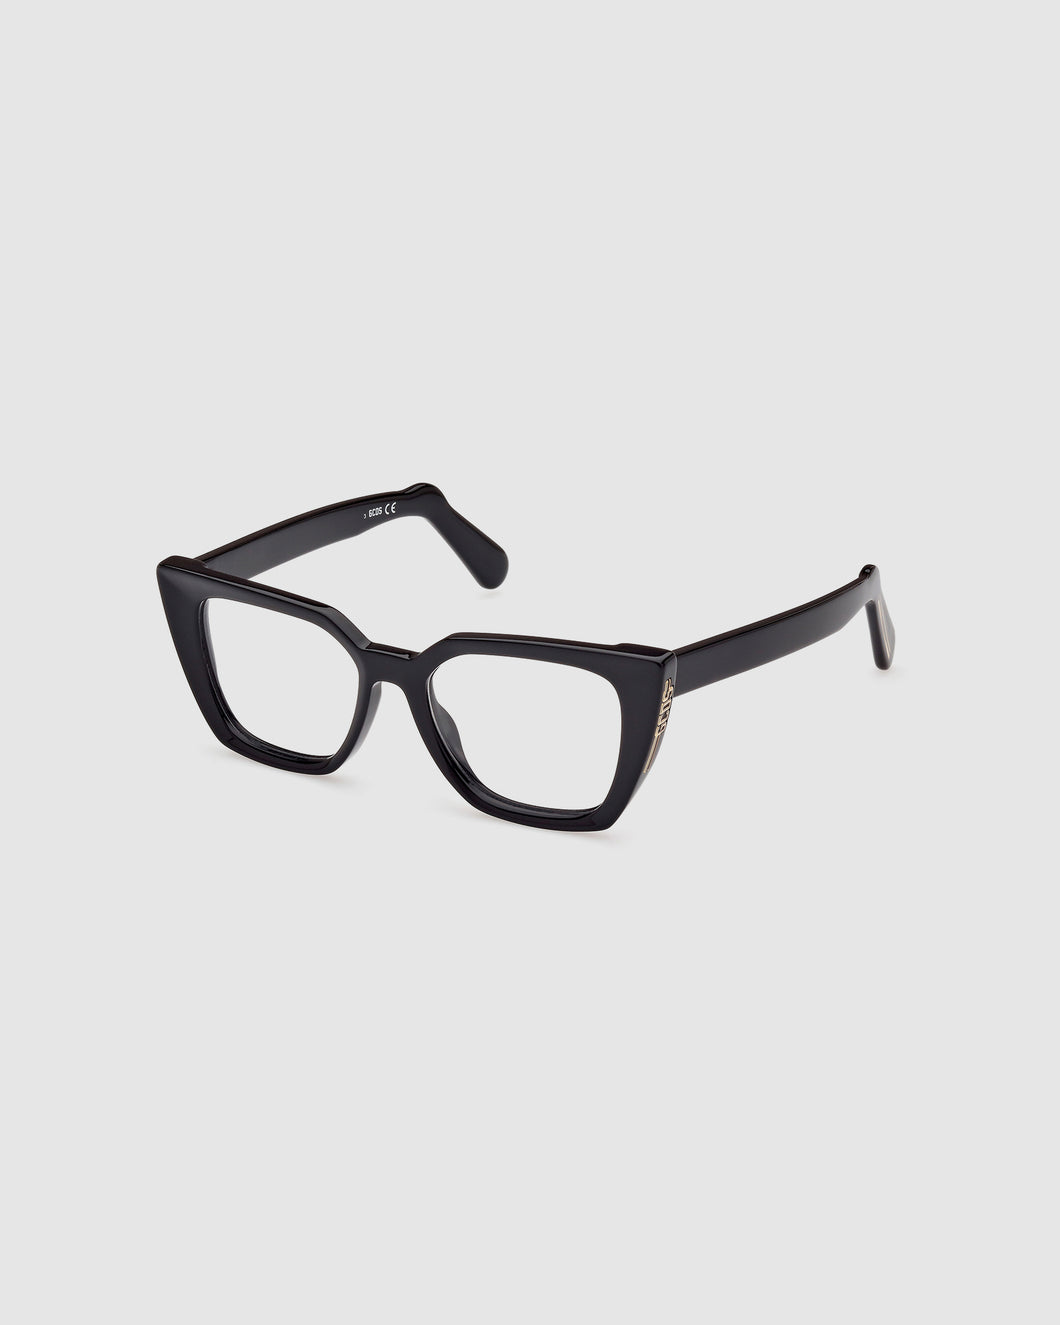 GD5012 Cat-eye eyeglasses : Women Sunglasses Black  | GCDS